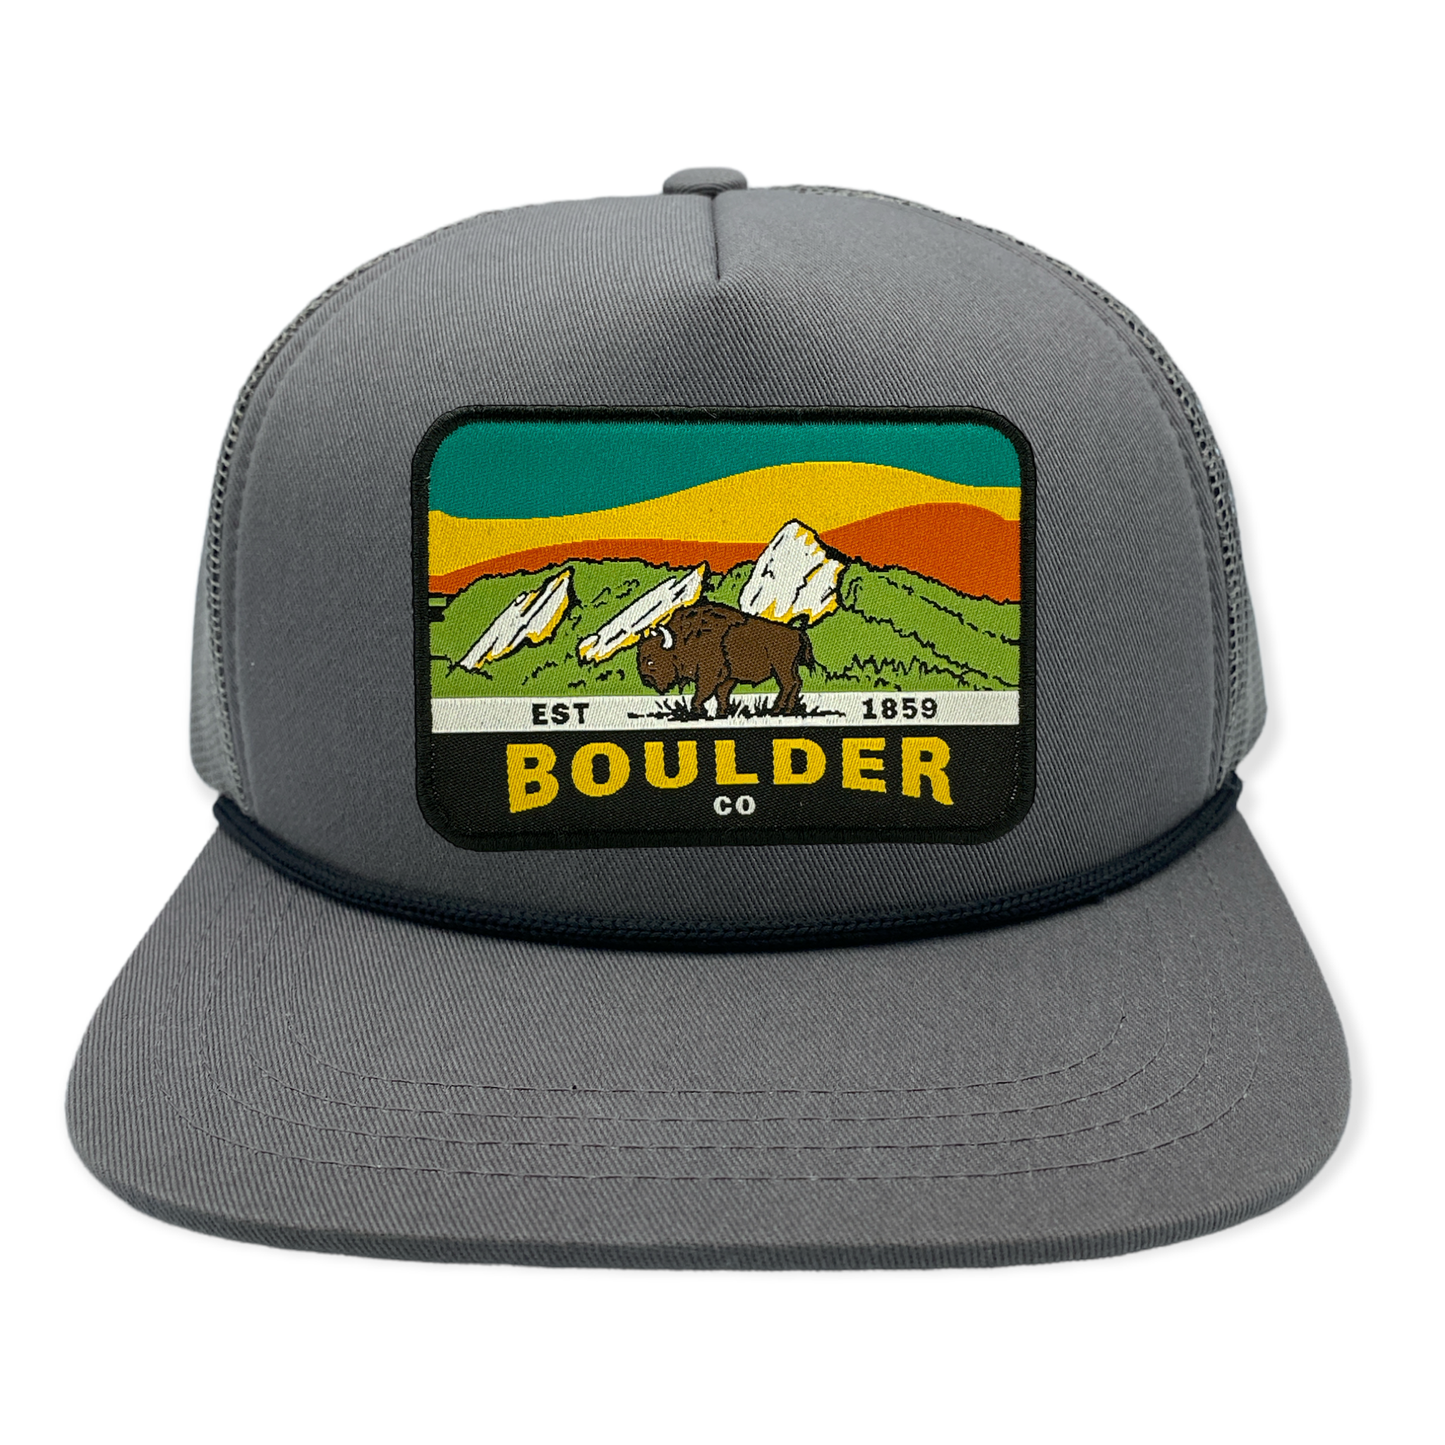 Boulder, CO Trucker